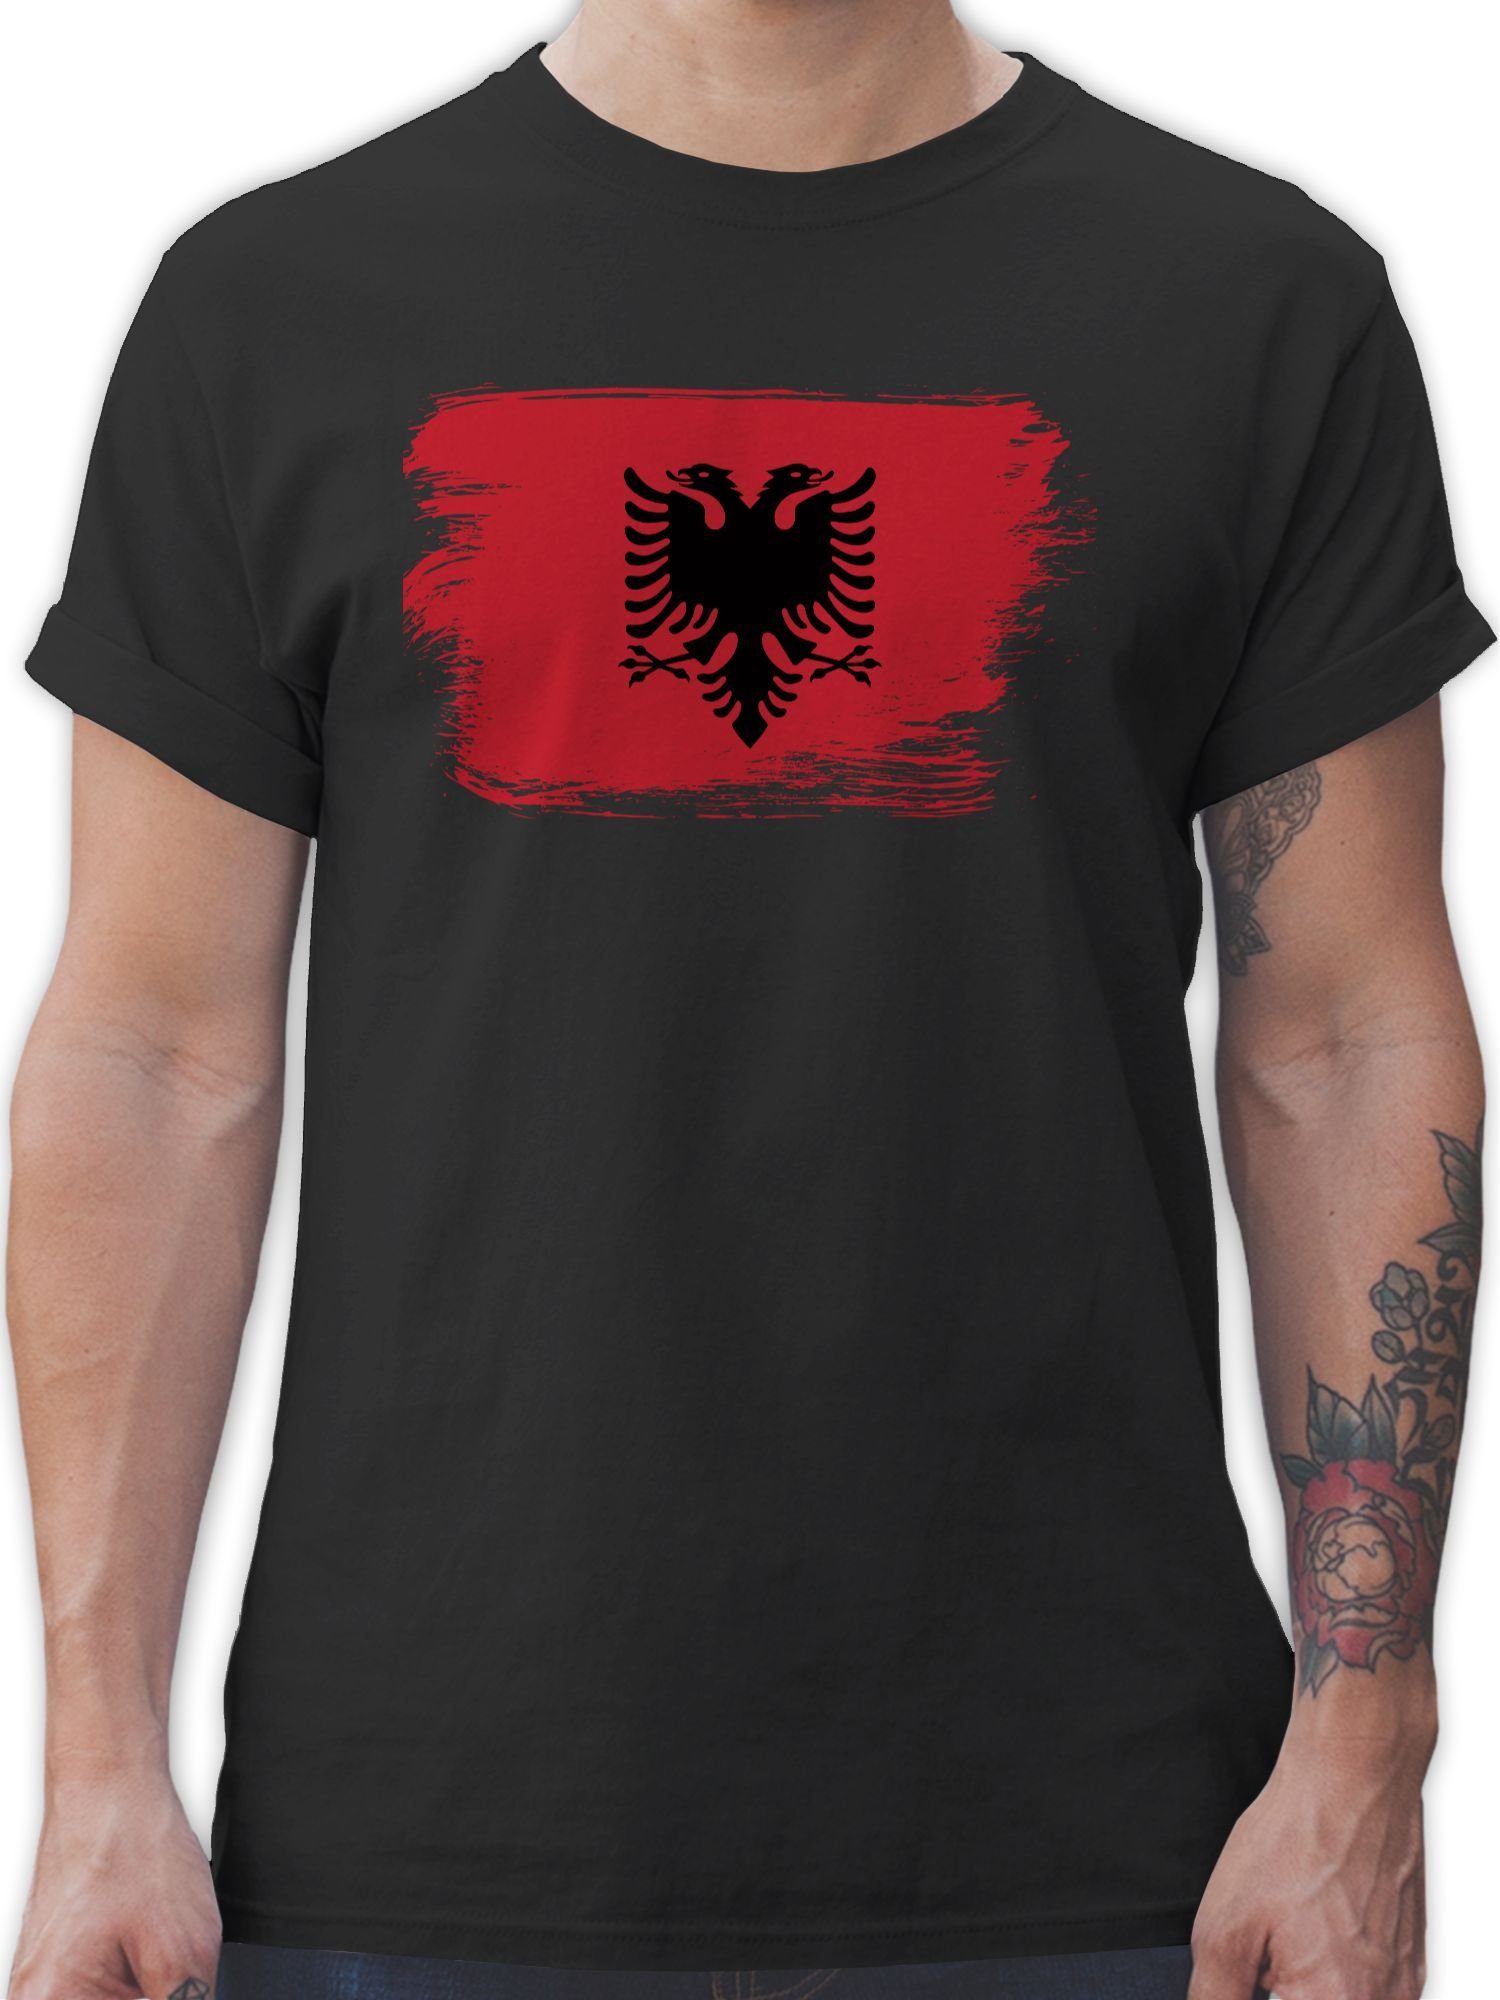 Shirtracer T-Shirt Flagge Vintage Outfit Schwarz 1 Albanien und City Stadt